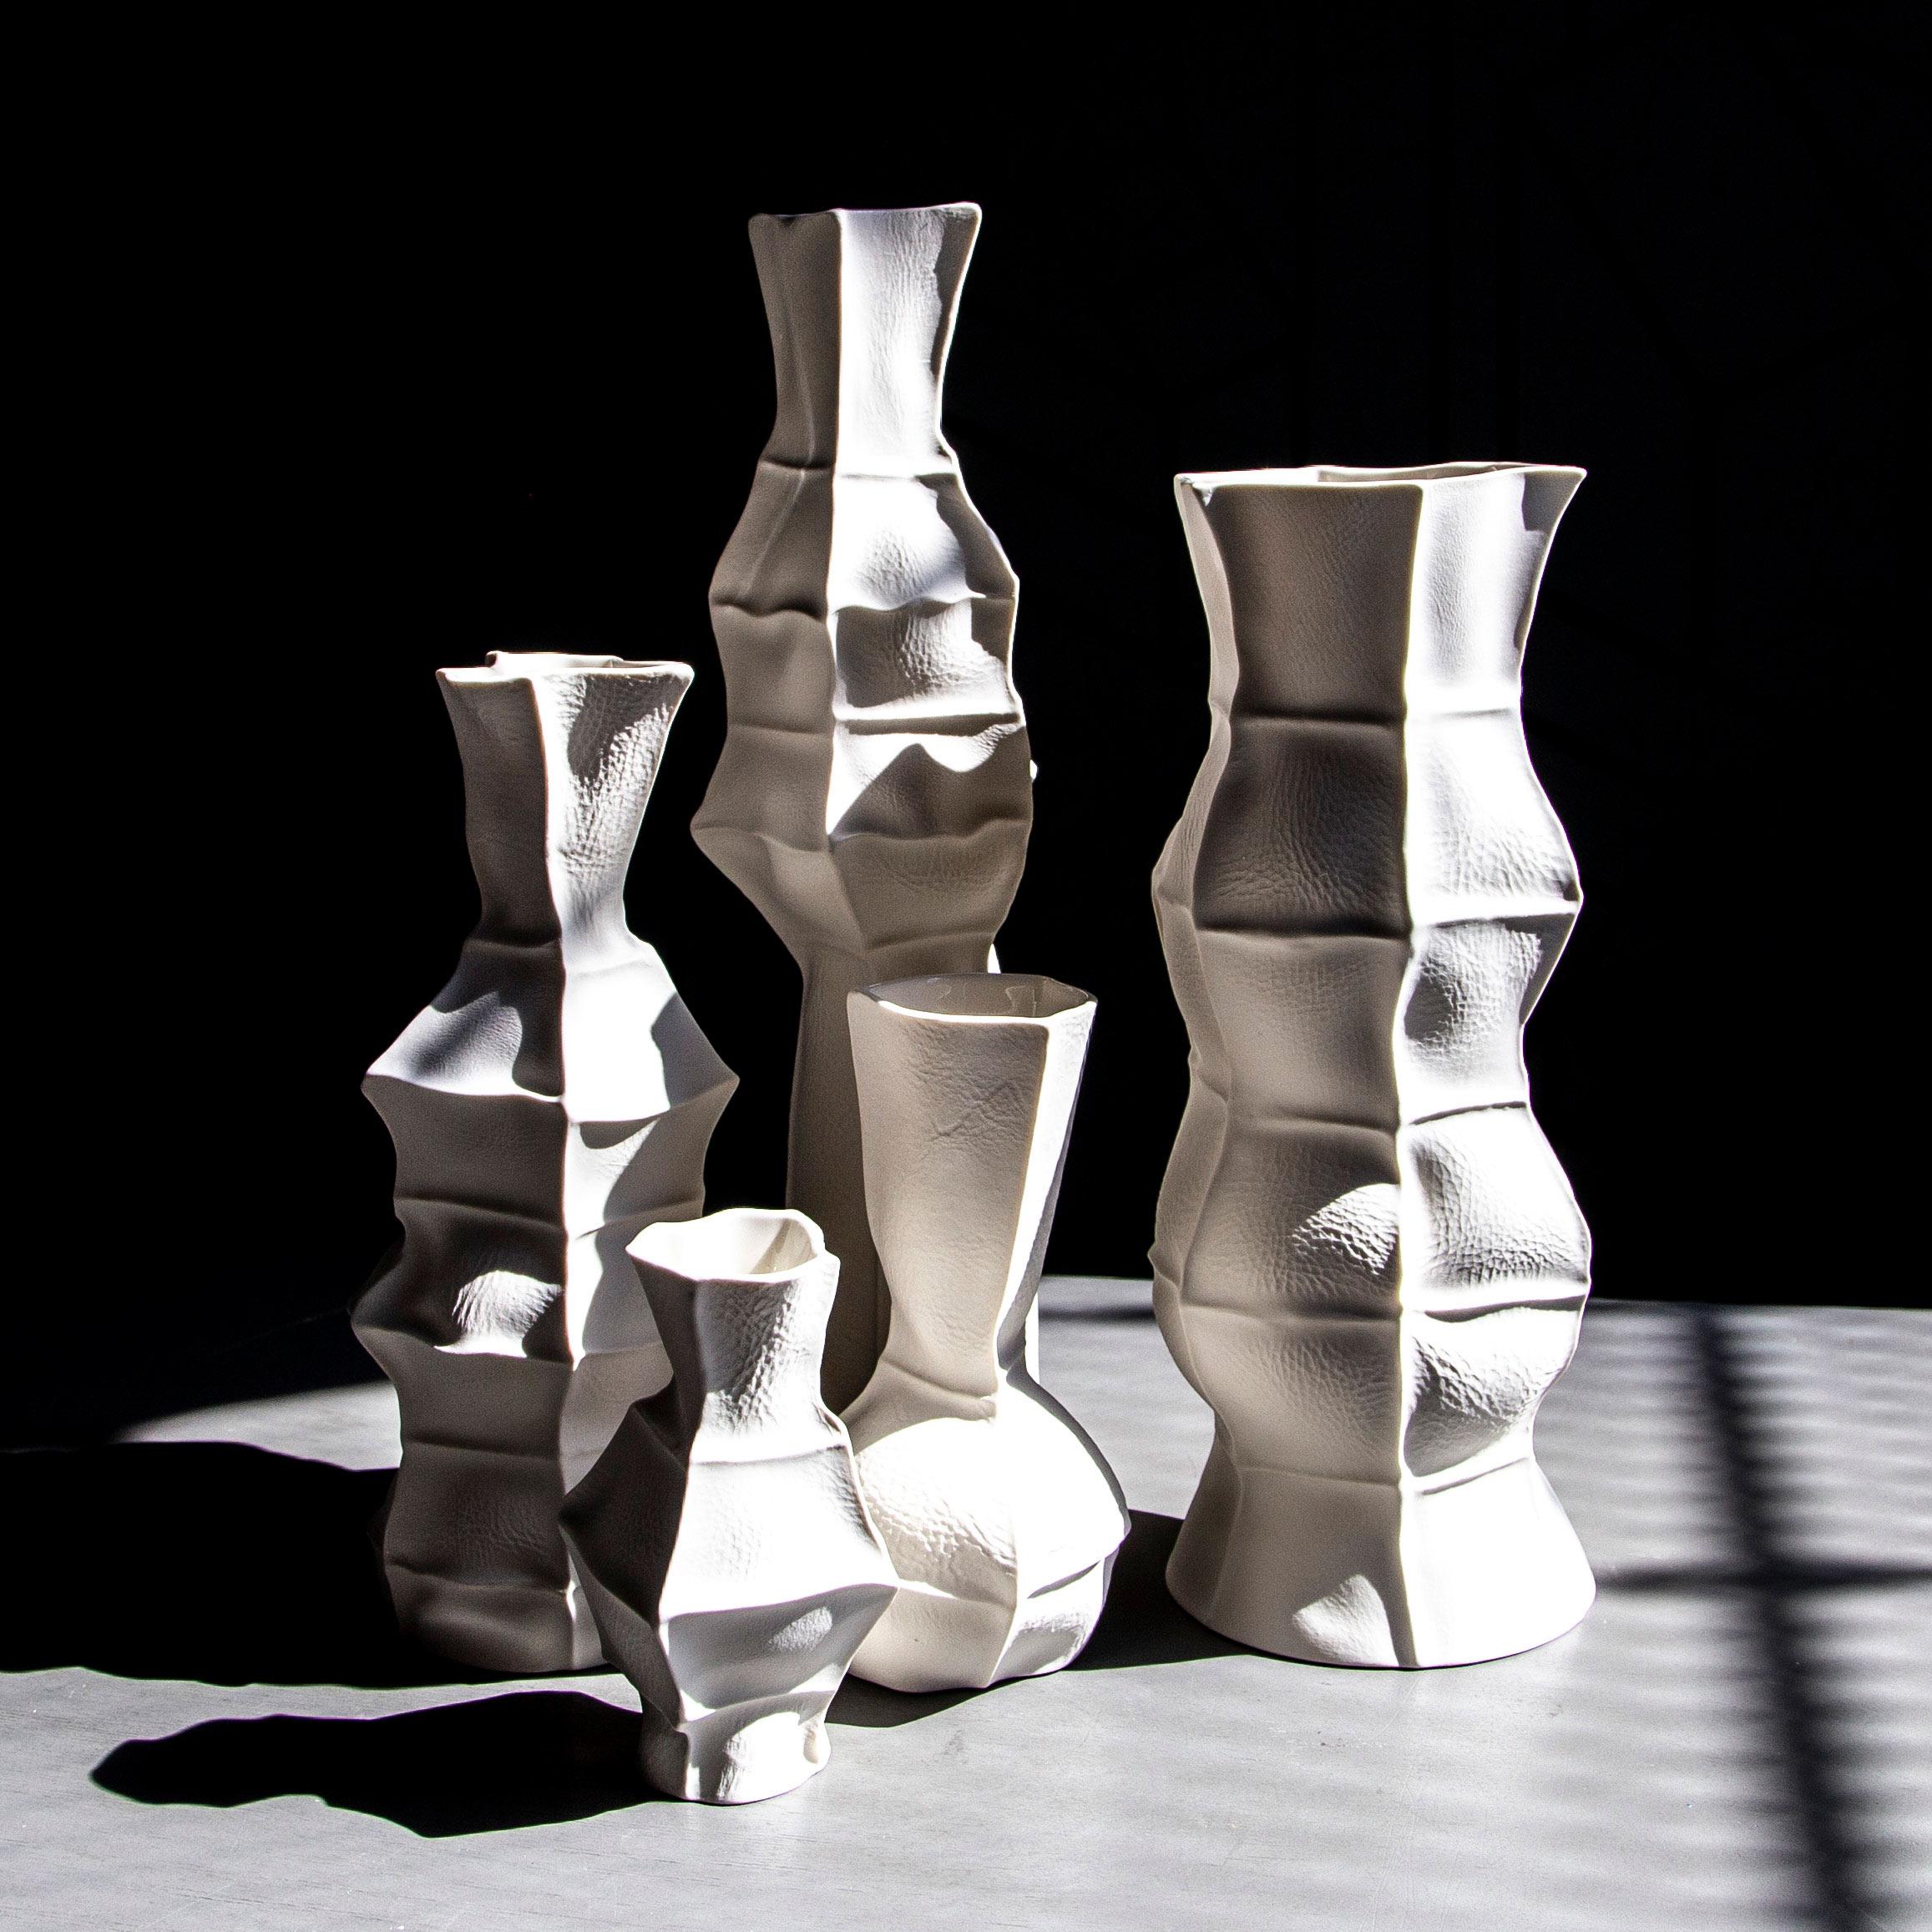 American In stock, Ceramic White Kawa Vase, Set of 5, organic porcelain vases